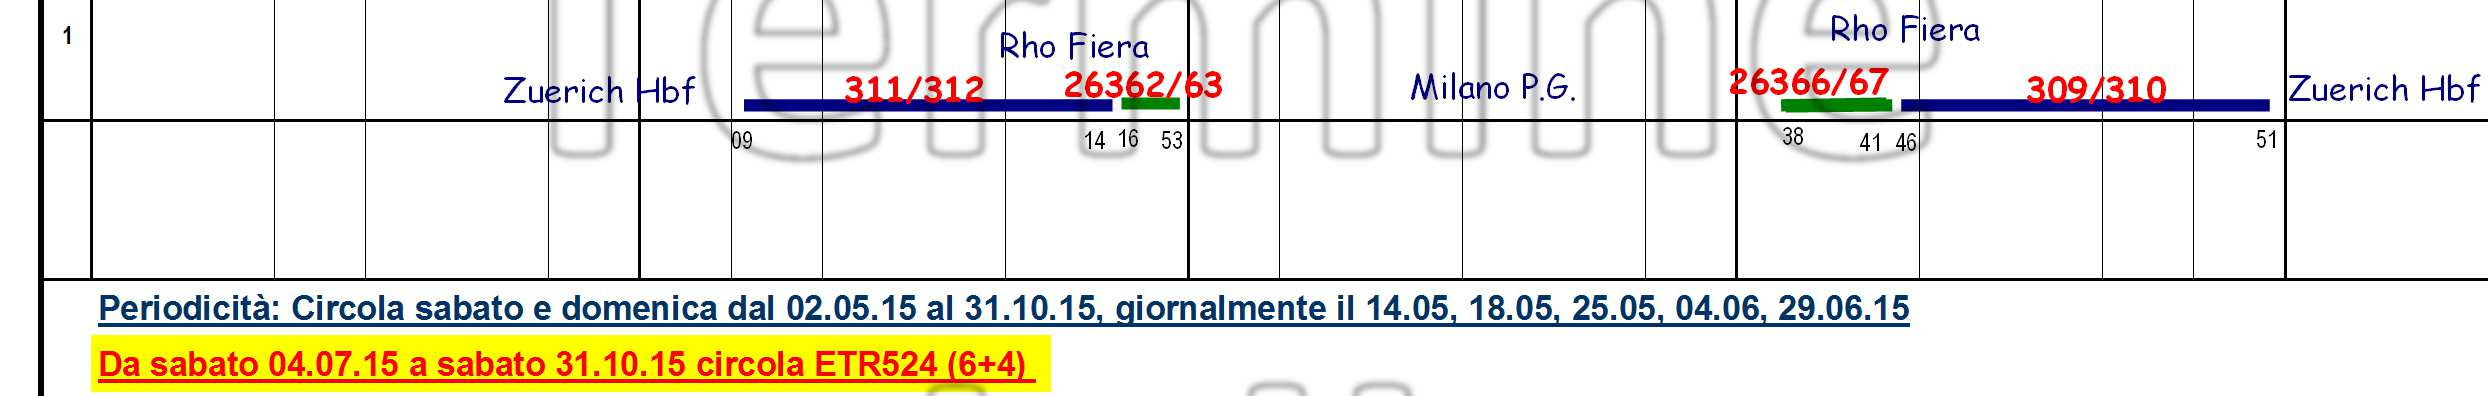 ORARIO 204-205 EXPO U2 (via Chiasso) Materiale ETR524 (Flirt 6) o ETR524 (Flirt 6+Flirt 4) proprietà SBB Validità dal 0--205 3/32 26362/63 Milano P.G.